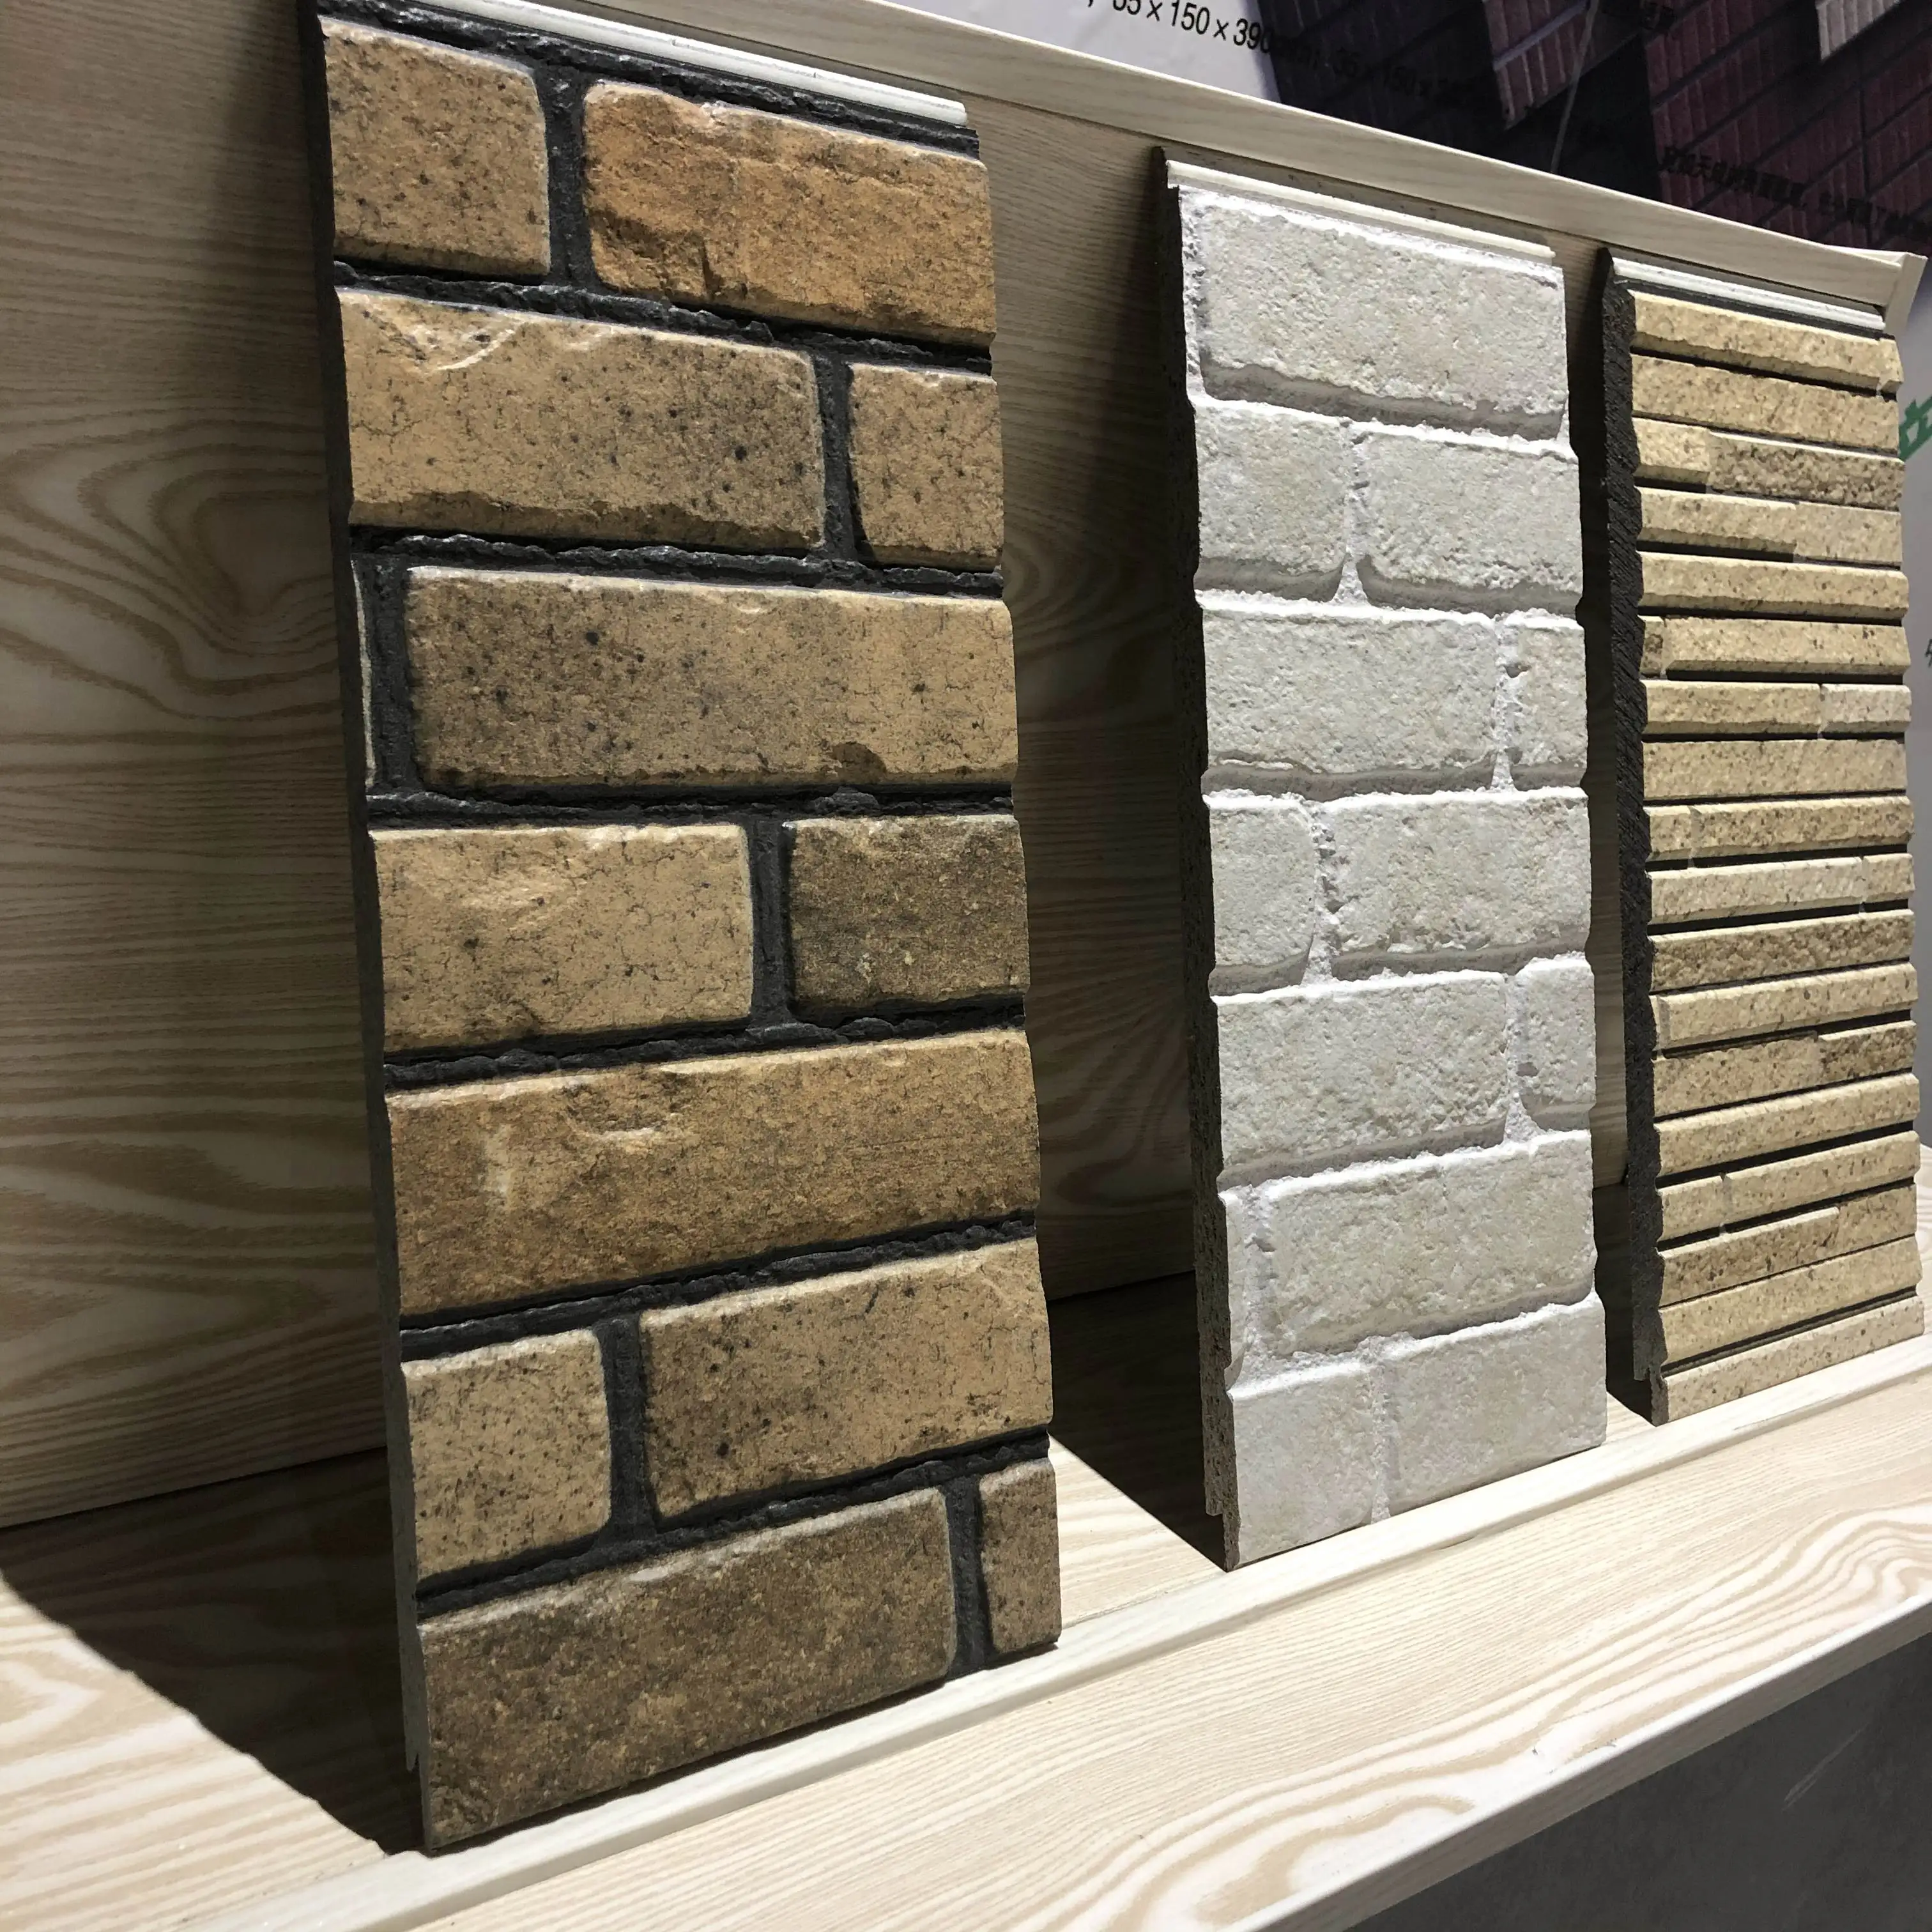 Wooden Finish Architecture Wall Panel Fiber Cement Siding Buy Fiber Cement Siding,Fiber Cement